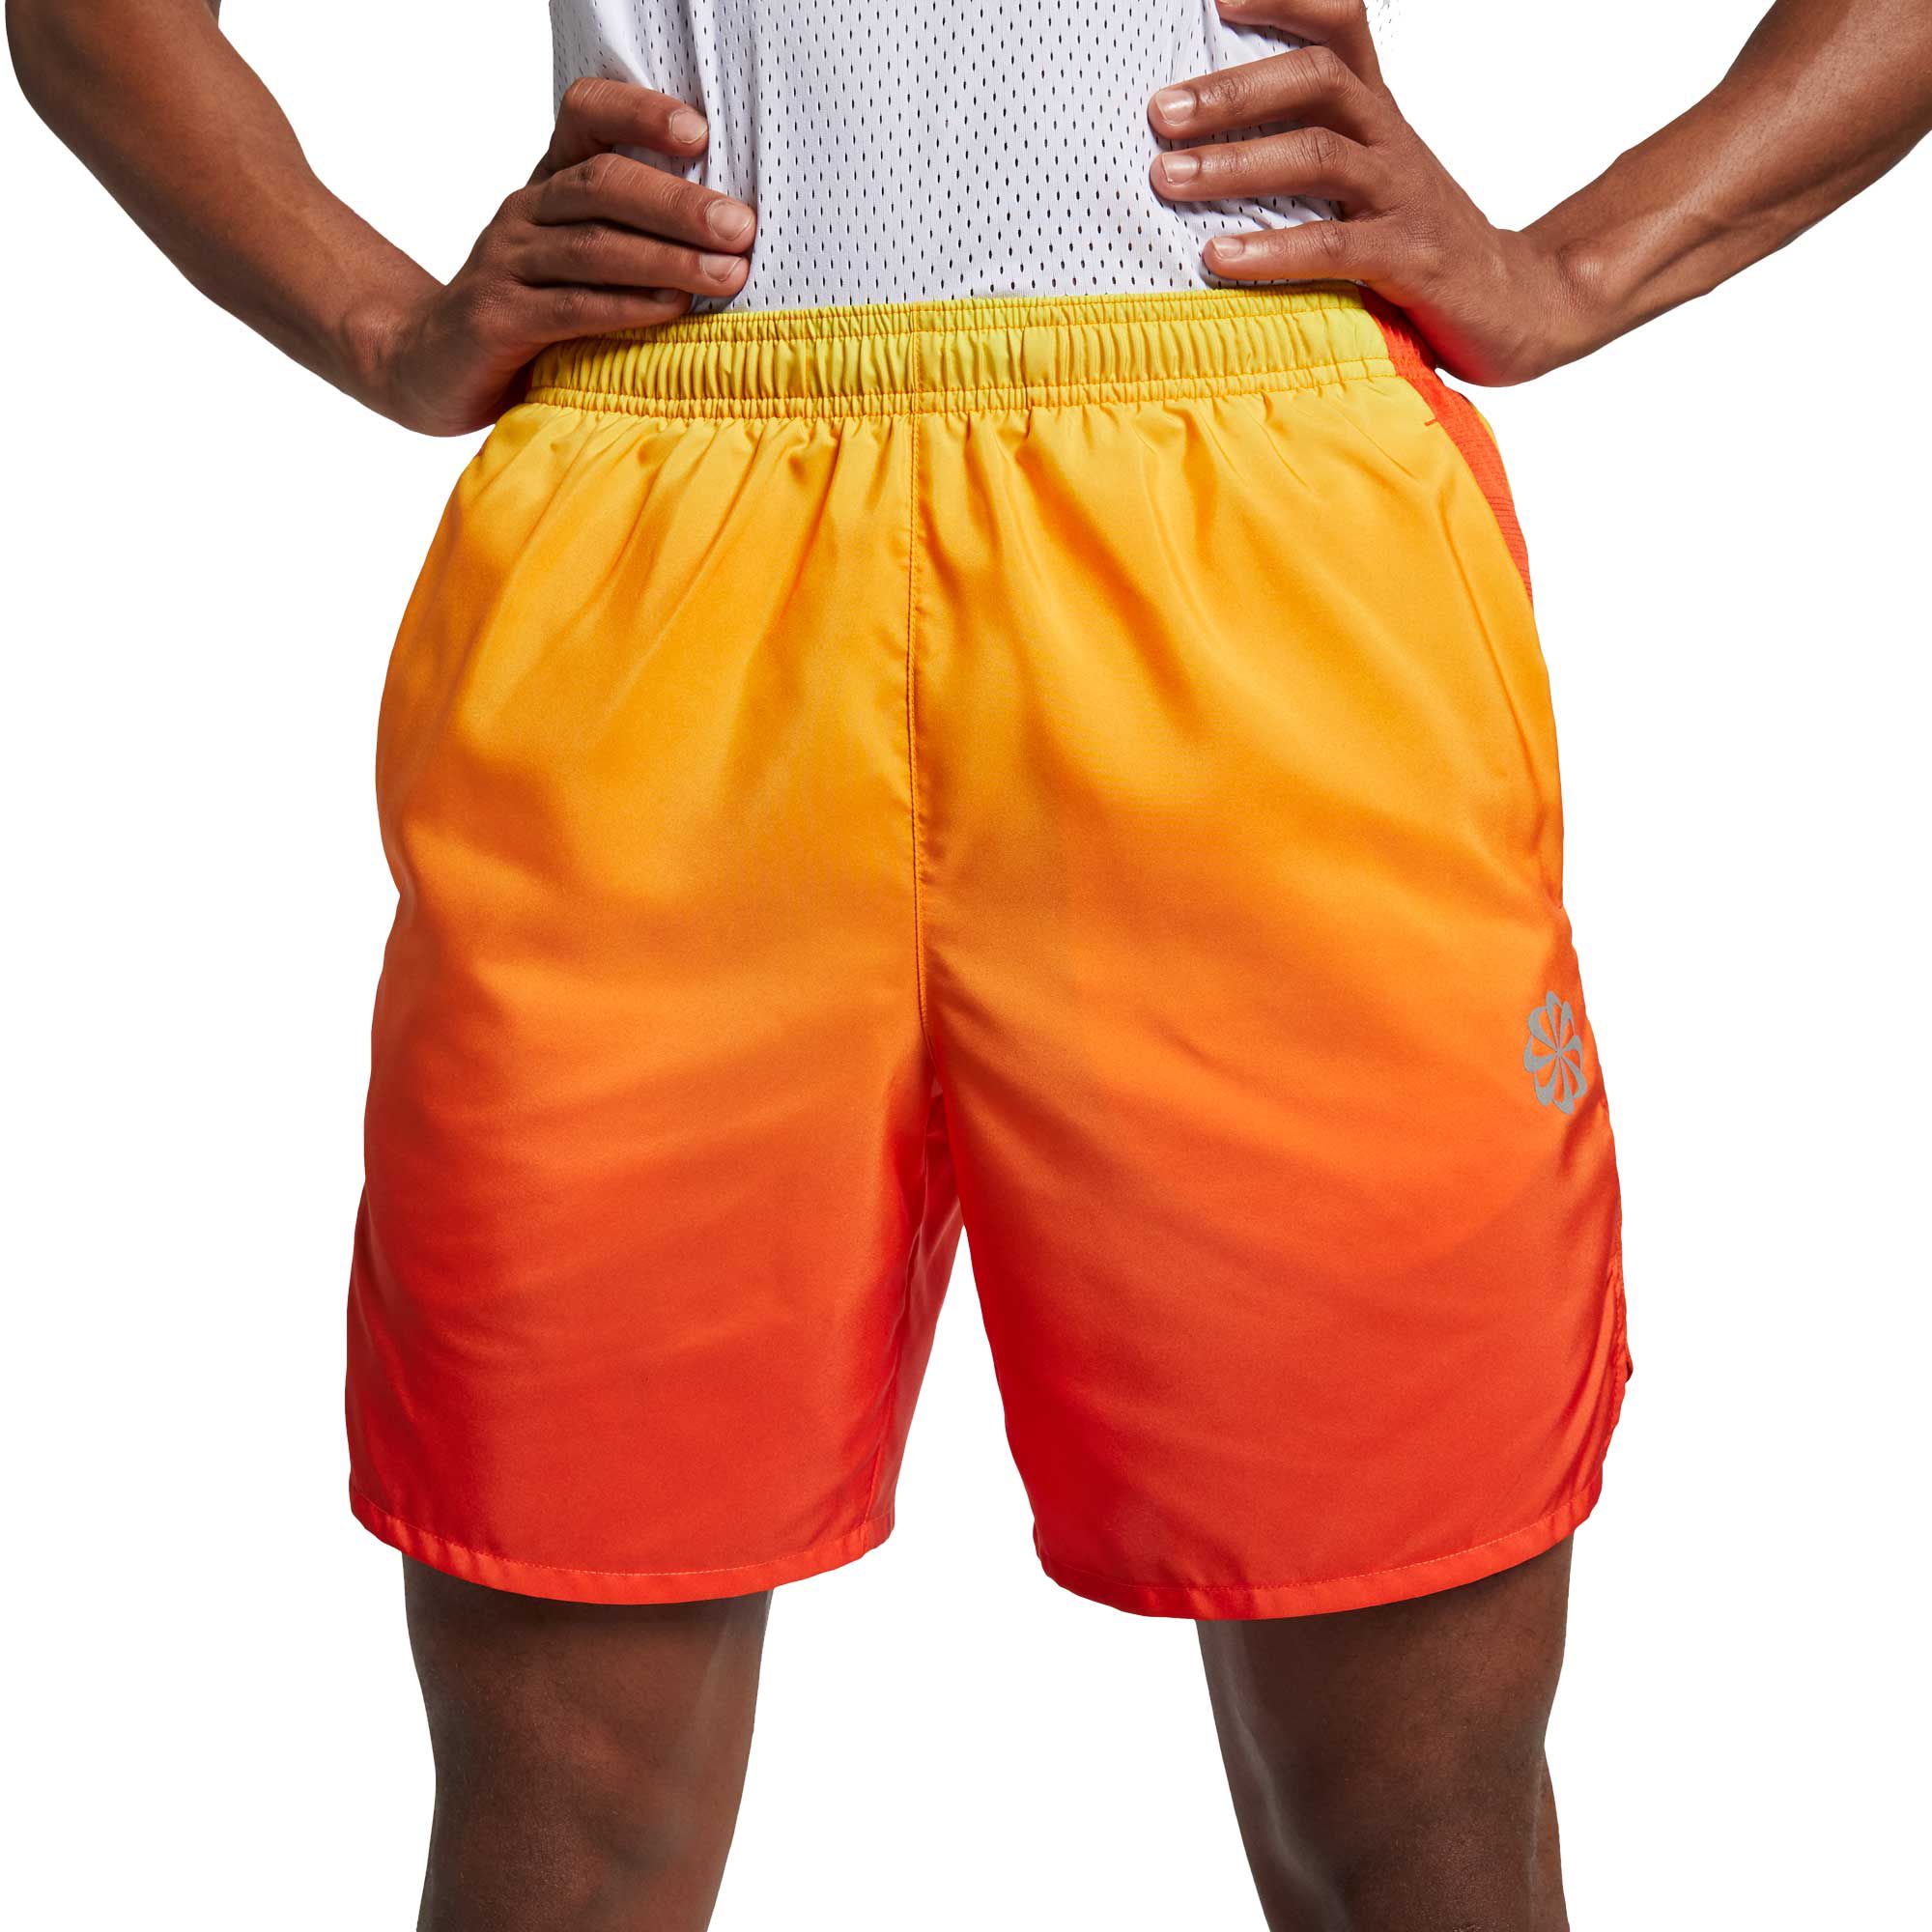 Nike Men's Dry Challenger 7'' Ombre Running Shorts - .97